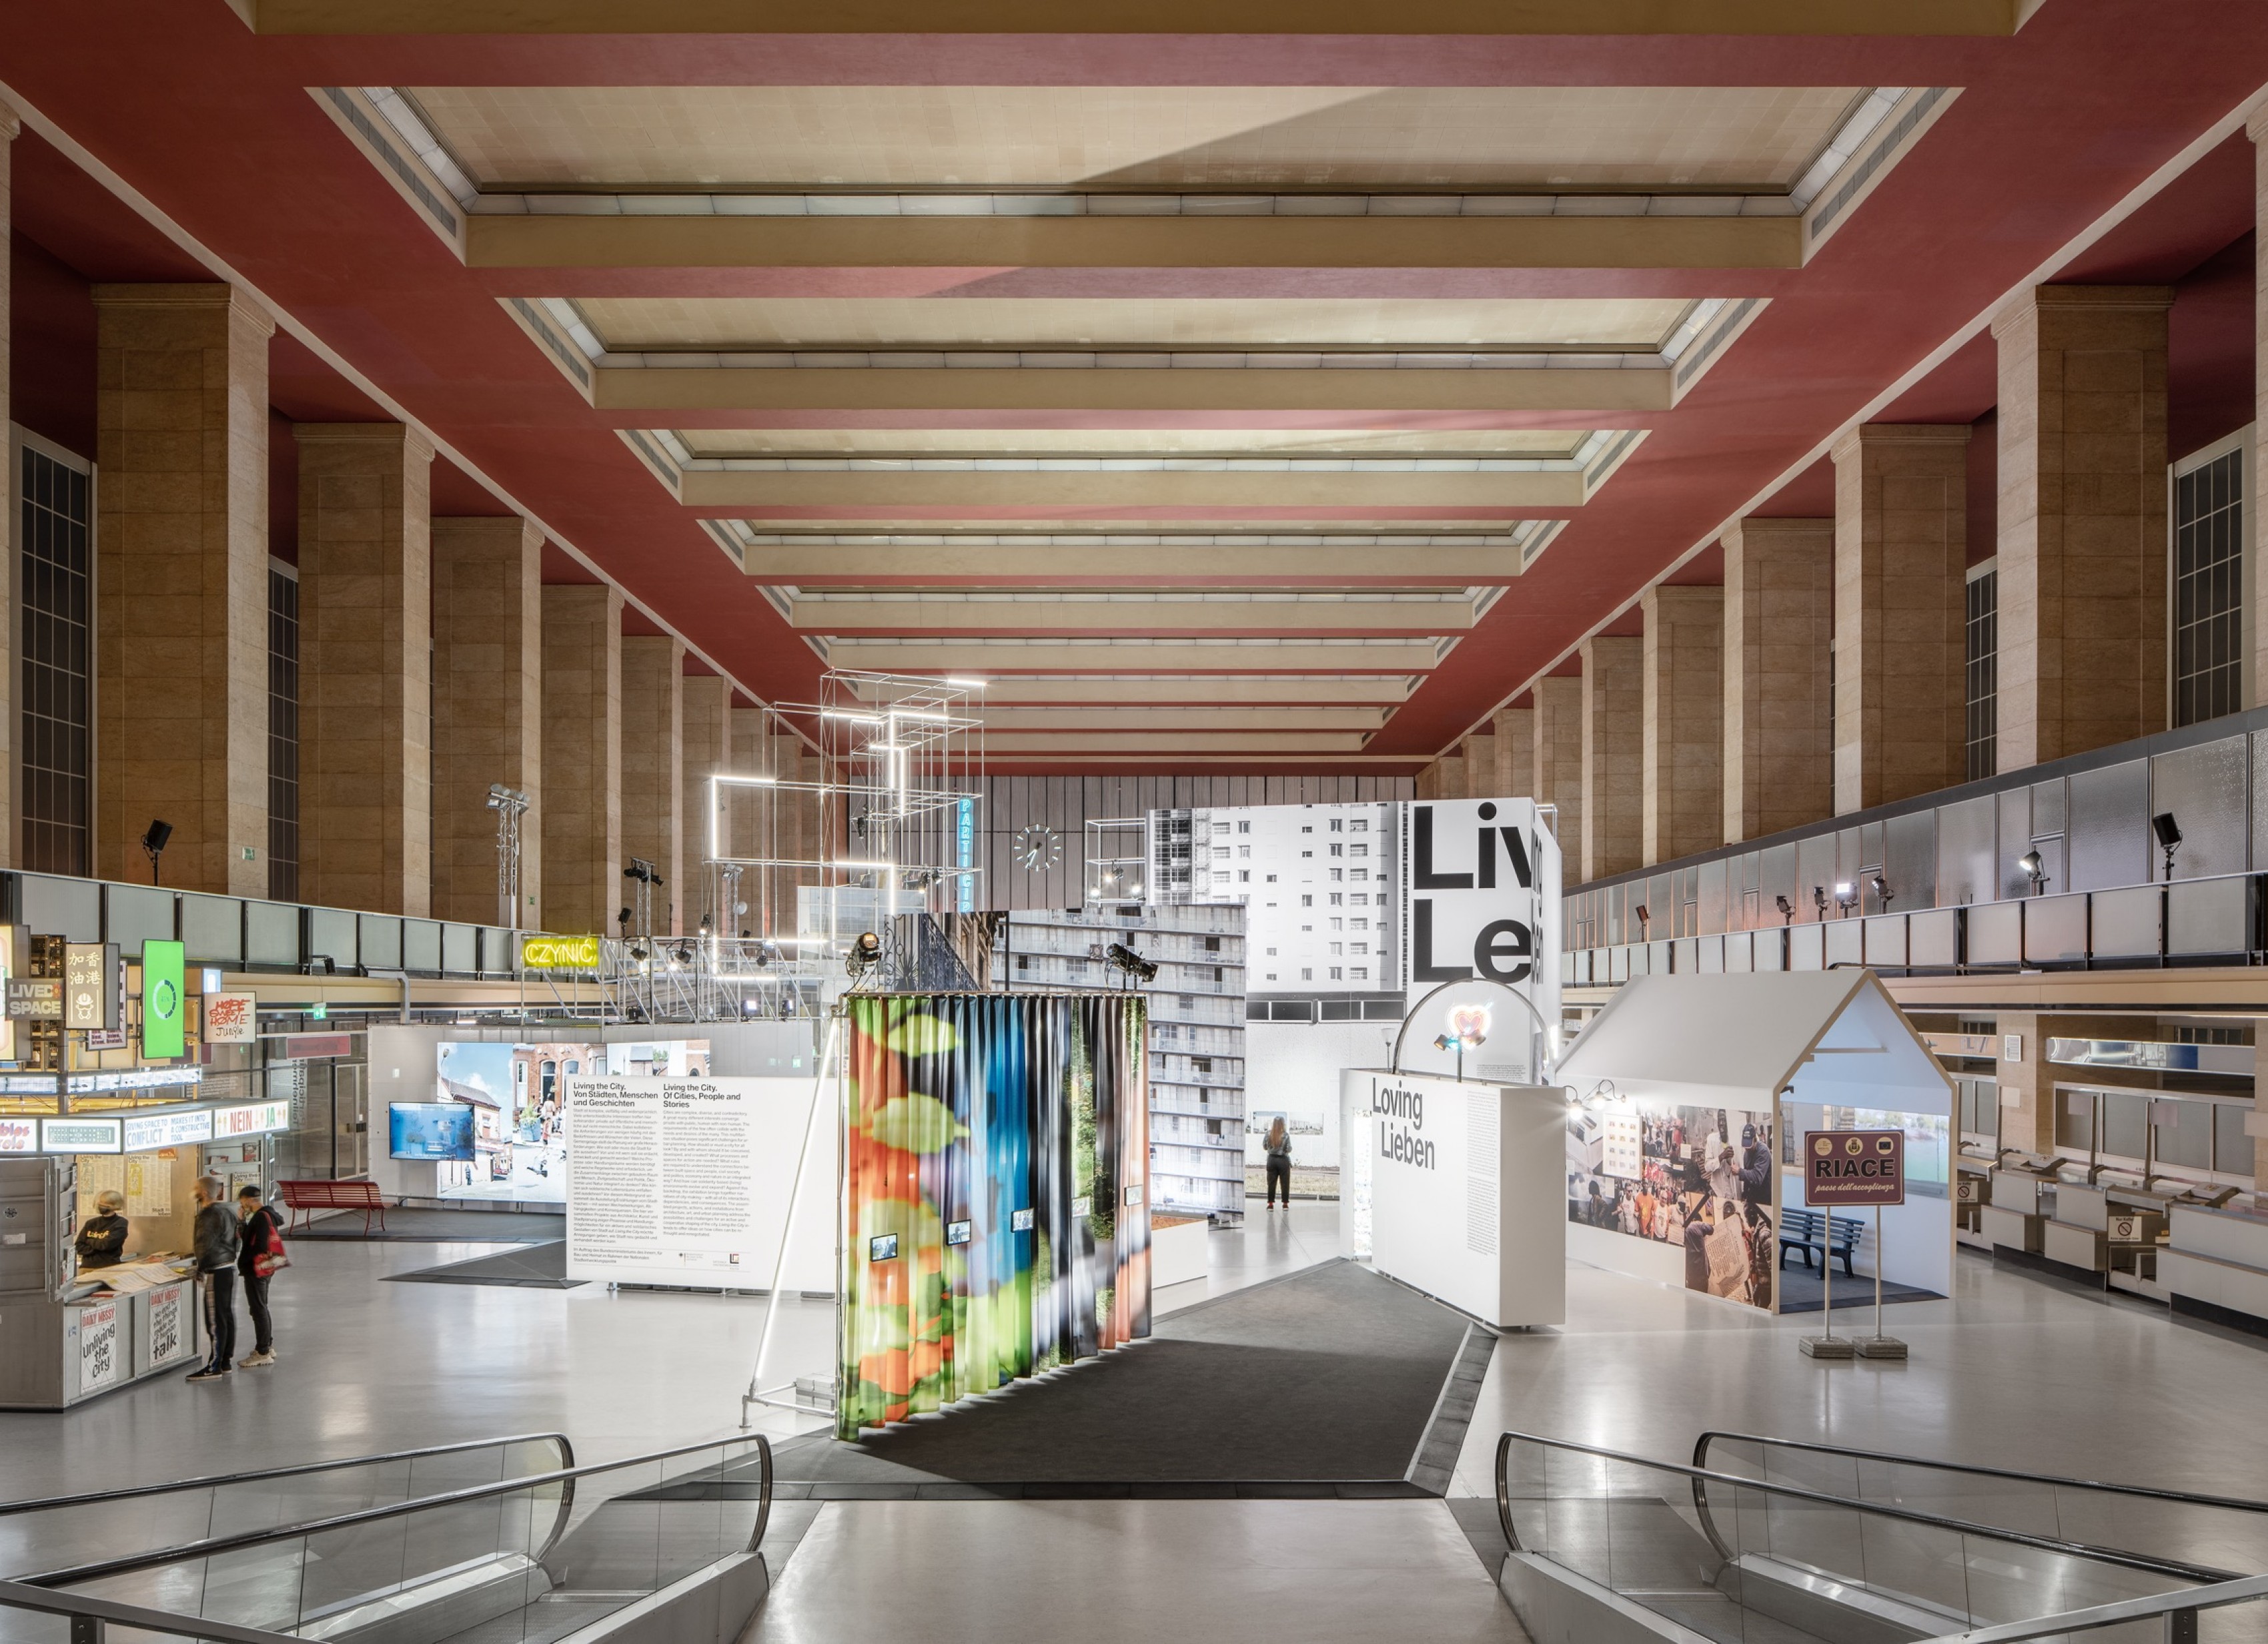 TheGreenEyl Ausstellung Gestaltung exhibition design, Berlin Flughafen Tempelhof, Living the City 